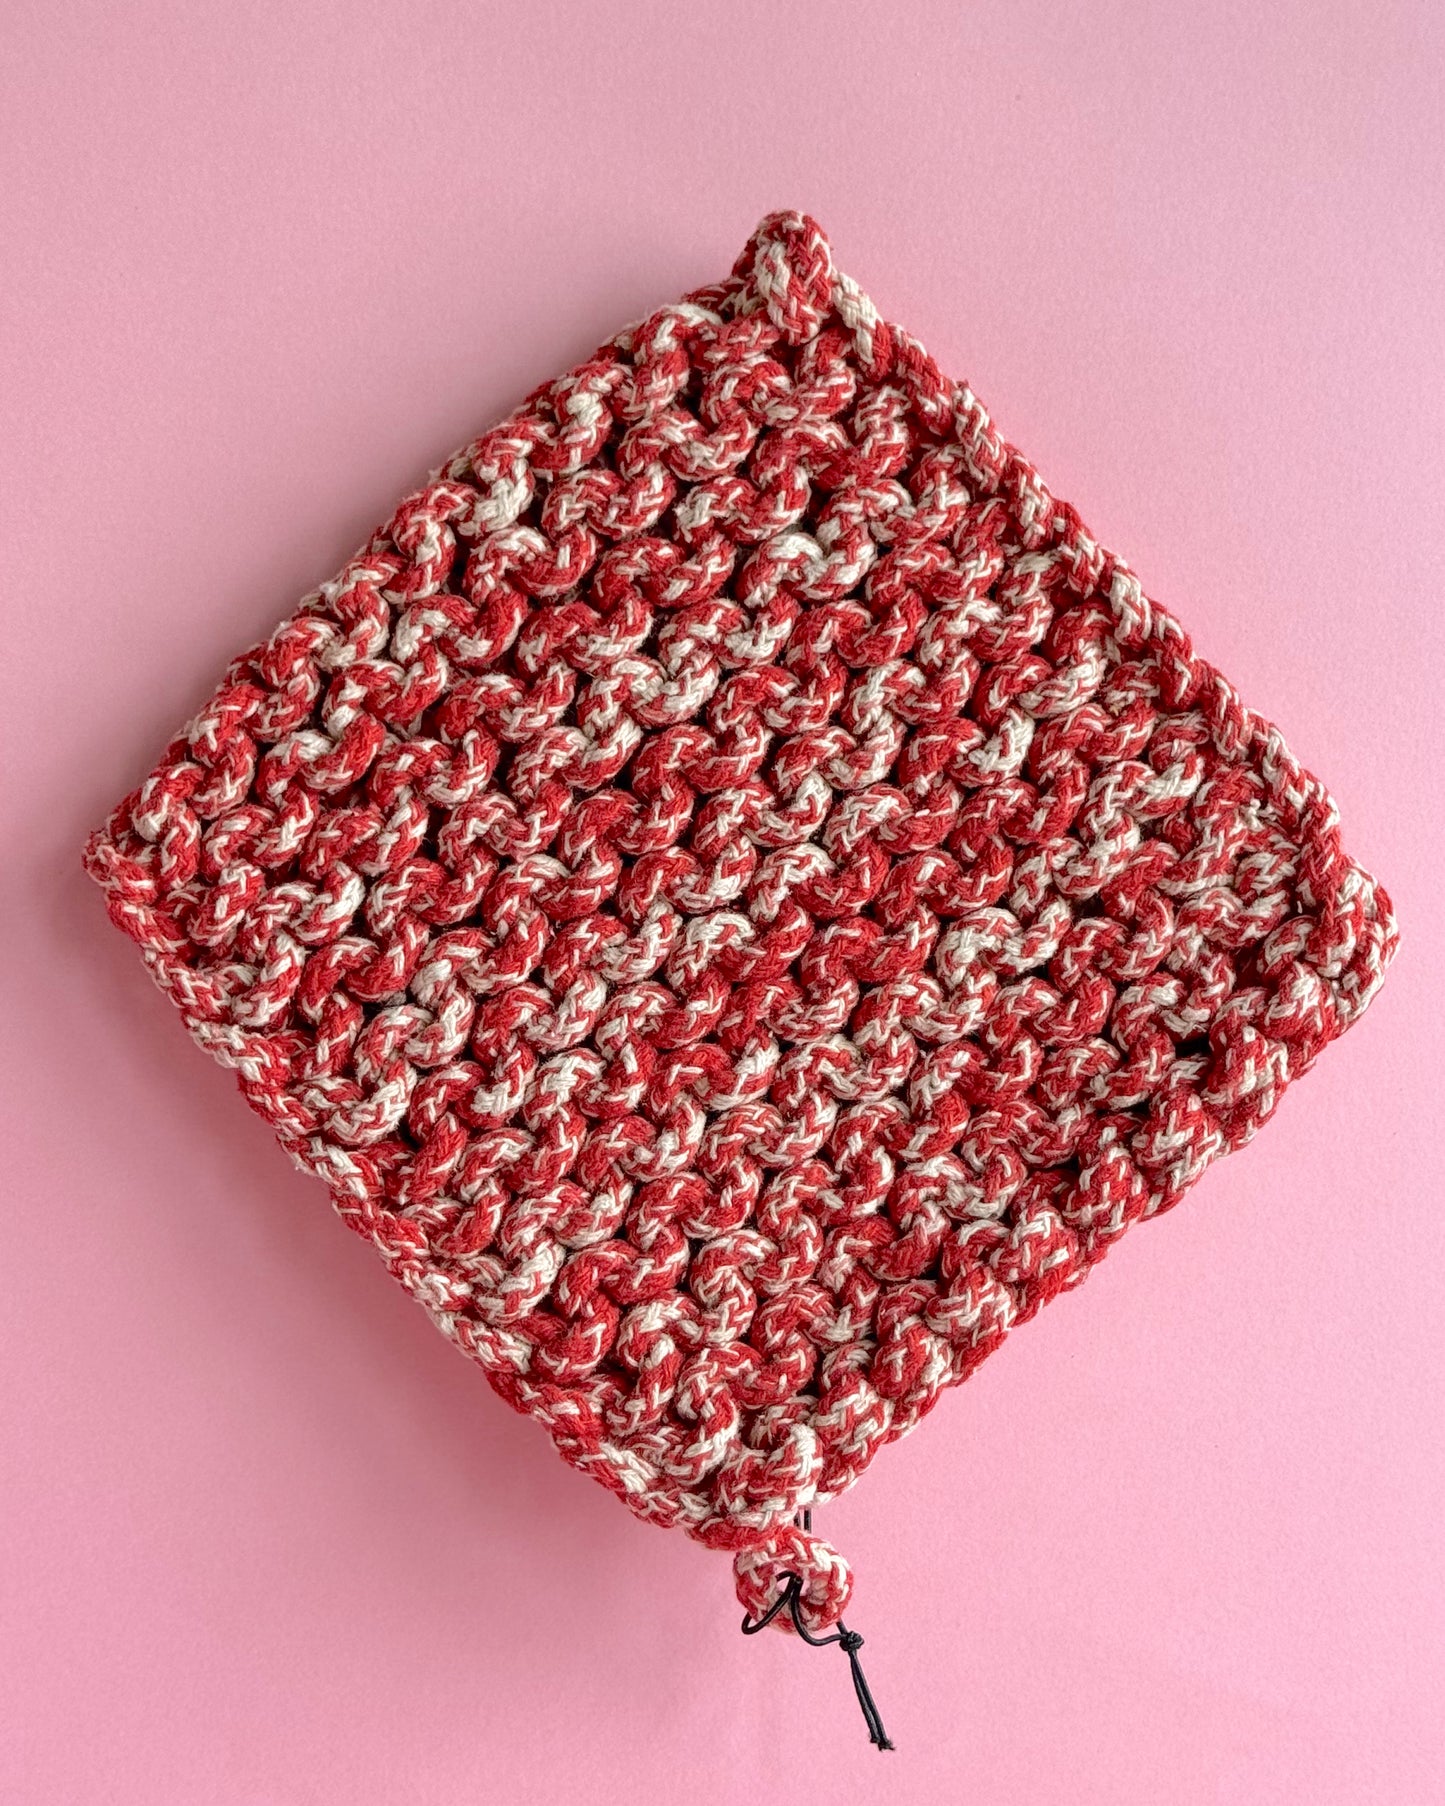 Cotton Crochet Pot Holder